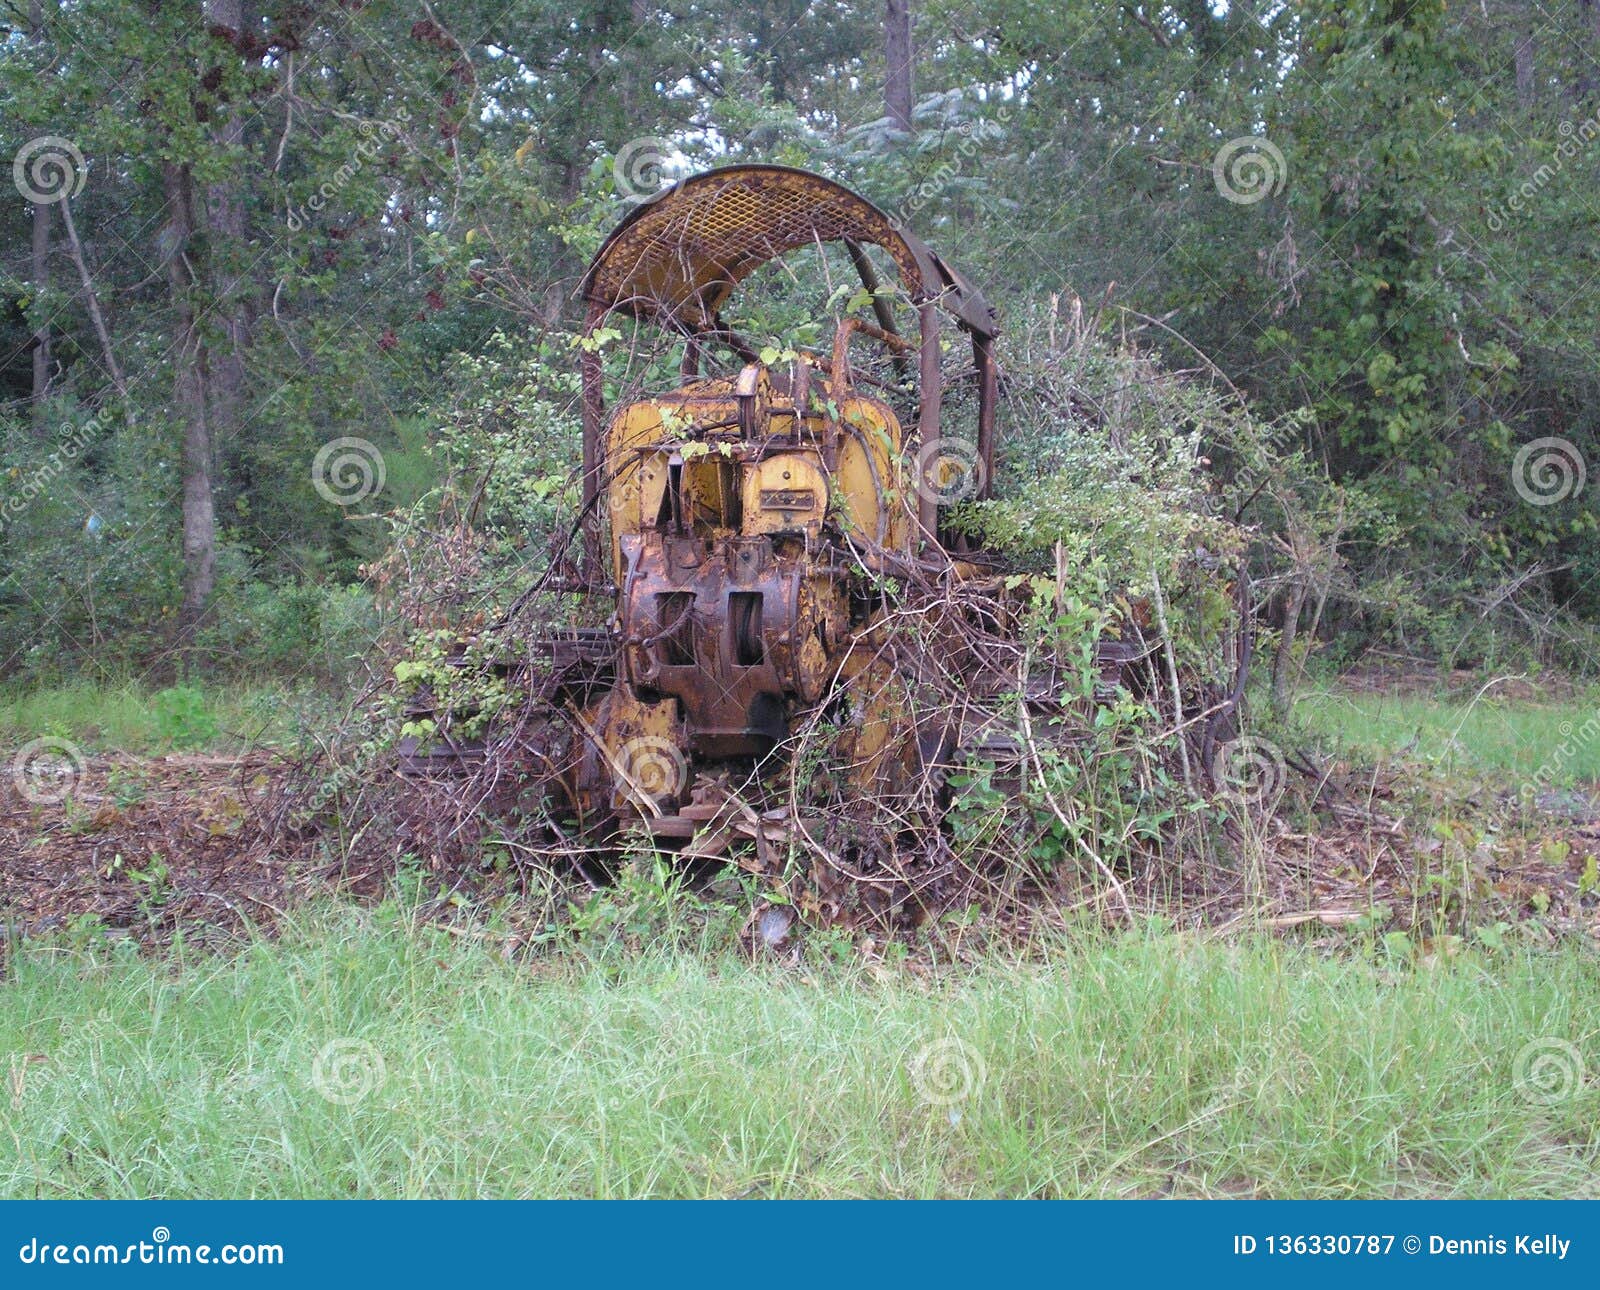 Tractor Over Abandon Bulldozer Nature Stock Image - Image of abandon, grown: 136330787